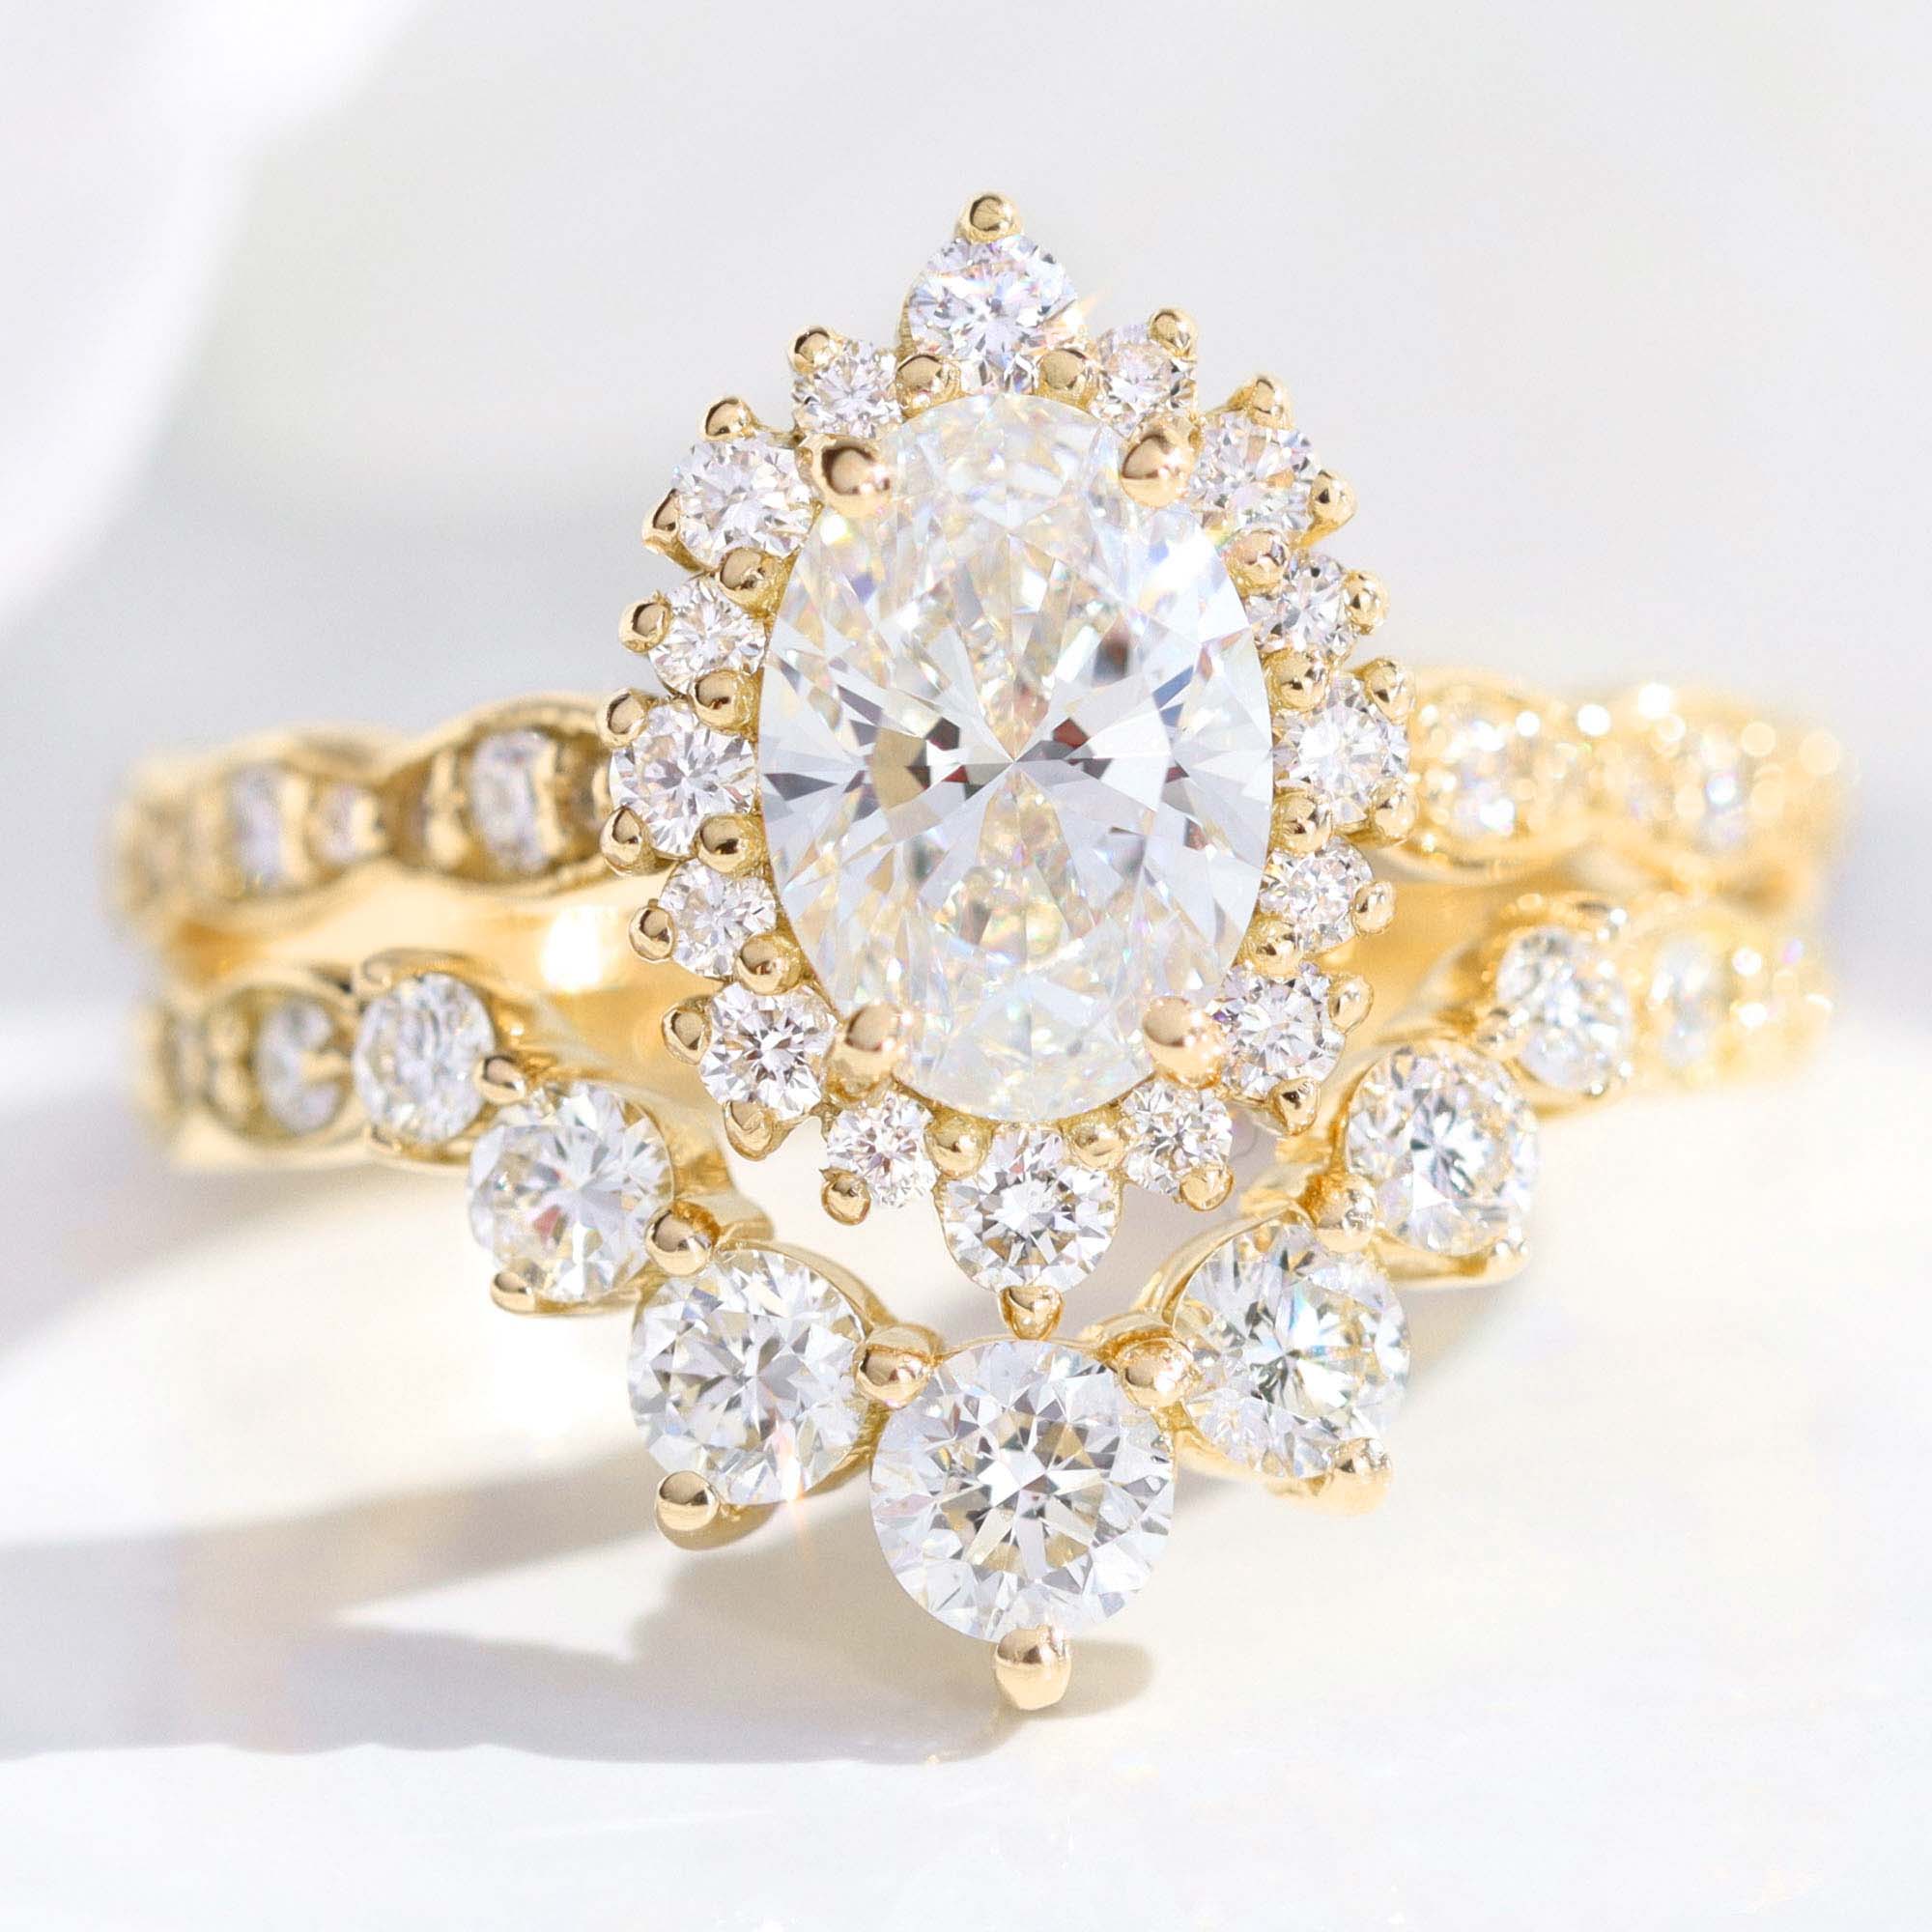 lab diamond ring stack yellow gold oval diamond halo engagement ring set La More Design Jewelry